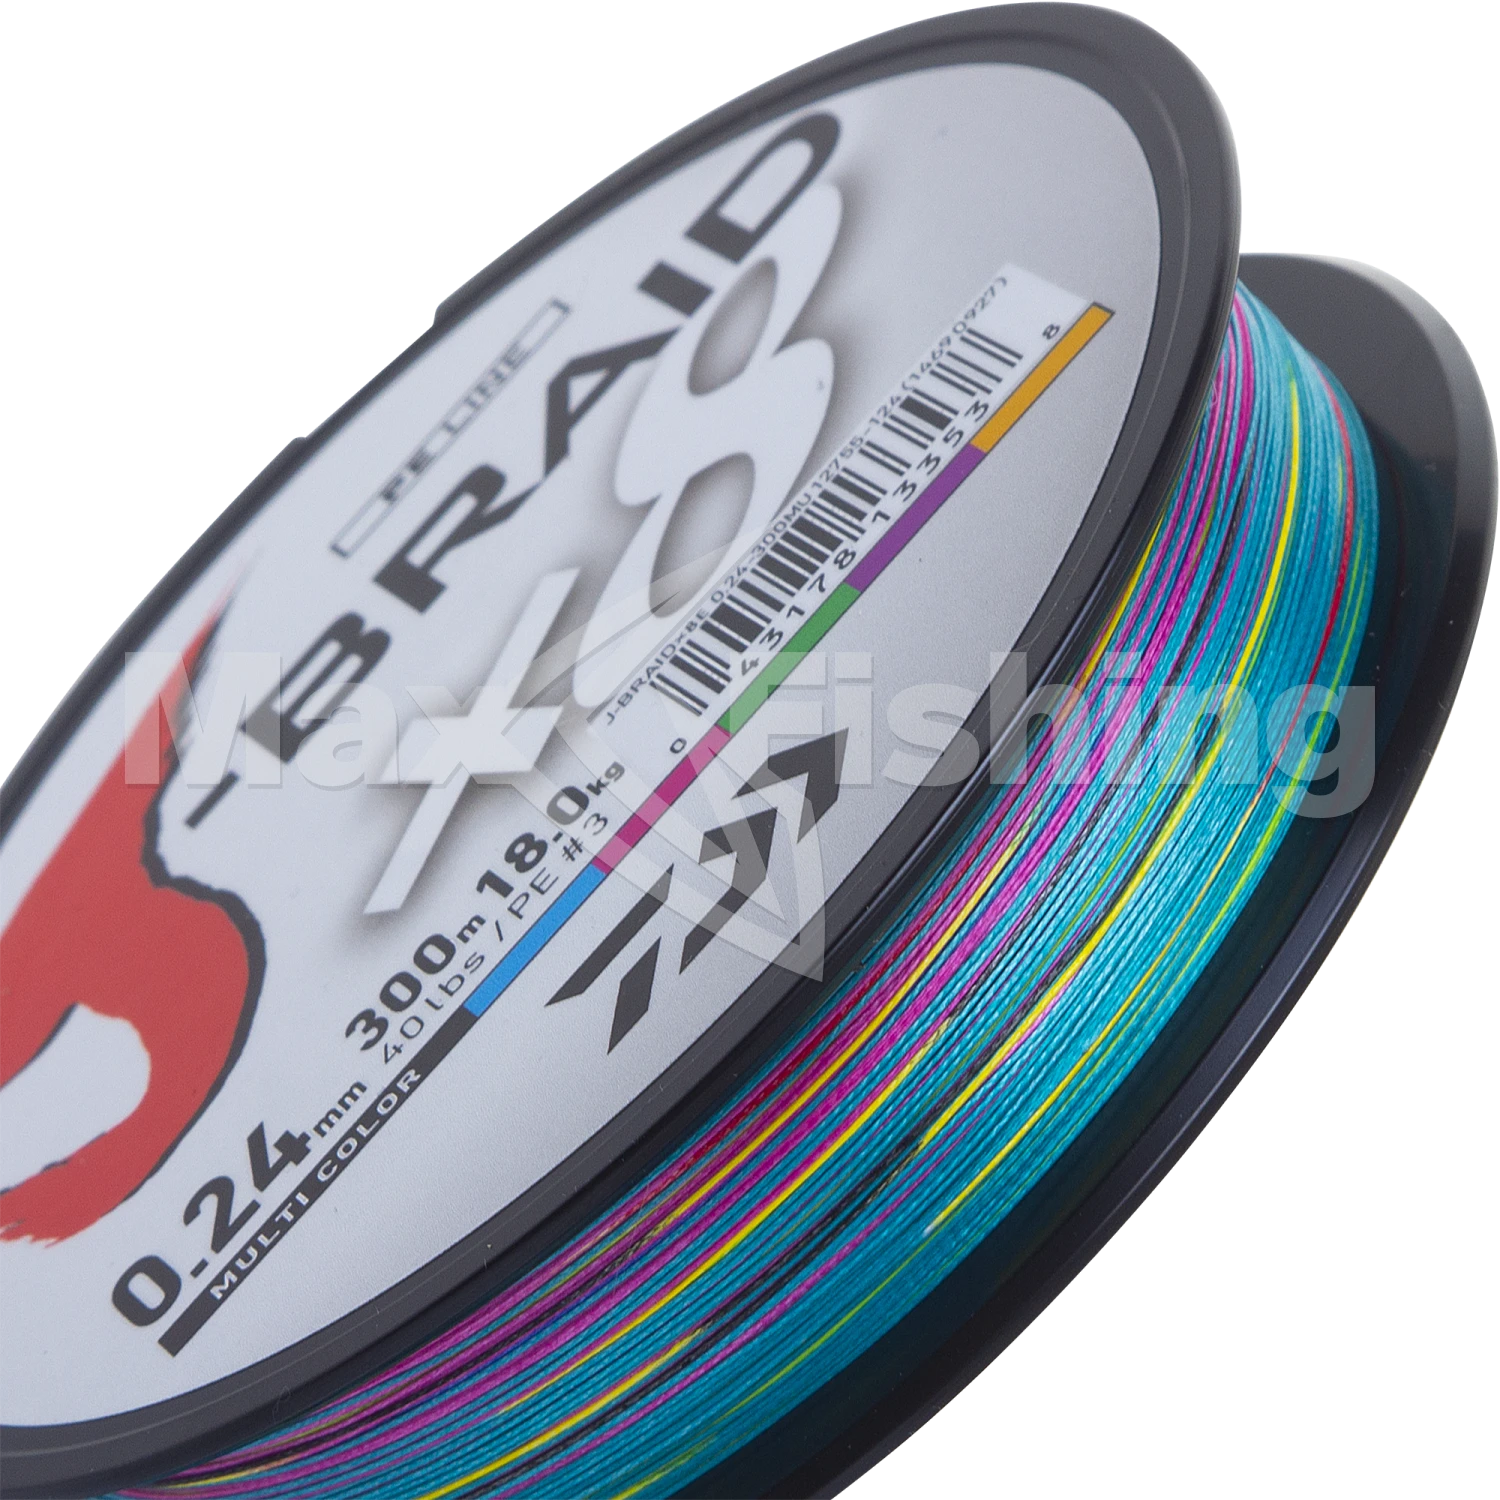 Шнур плетеный Daiwa J-Braid X8 #3 0,24мм 300м (multicolor)